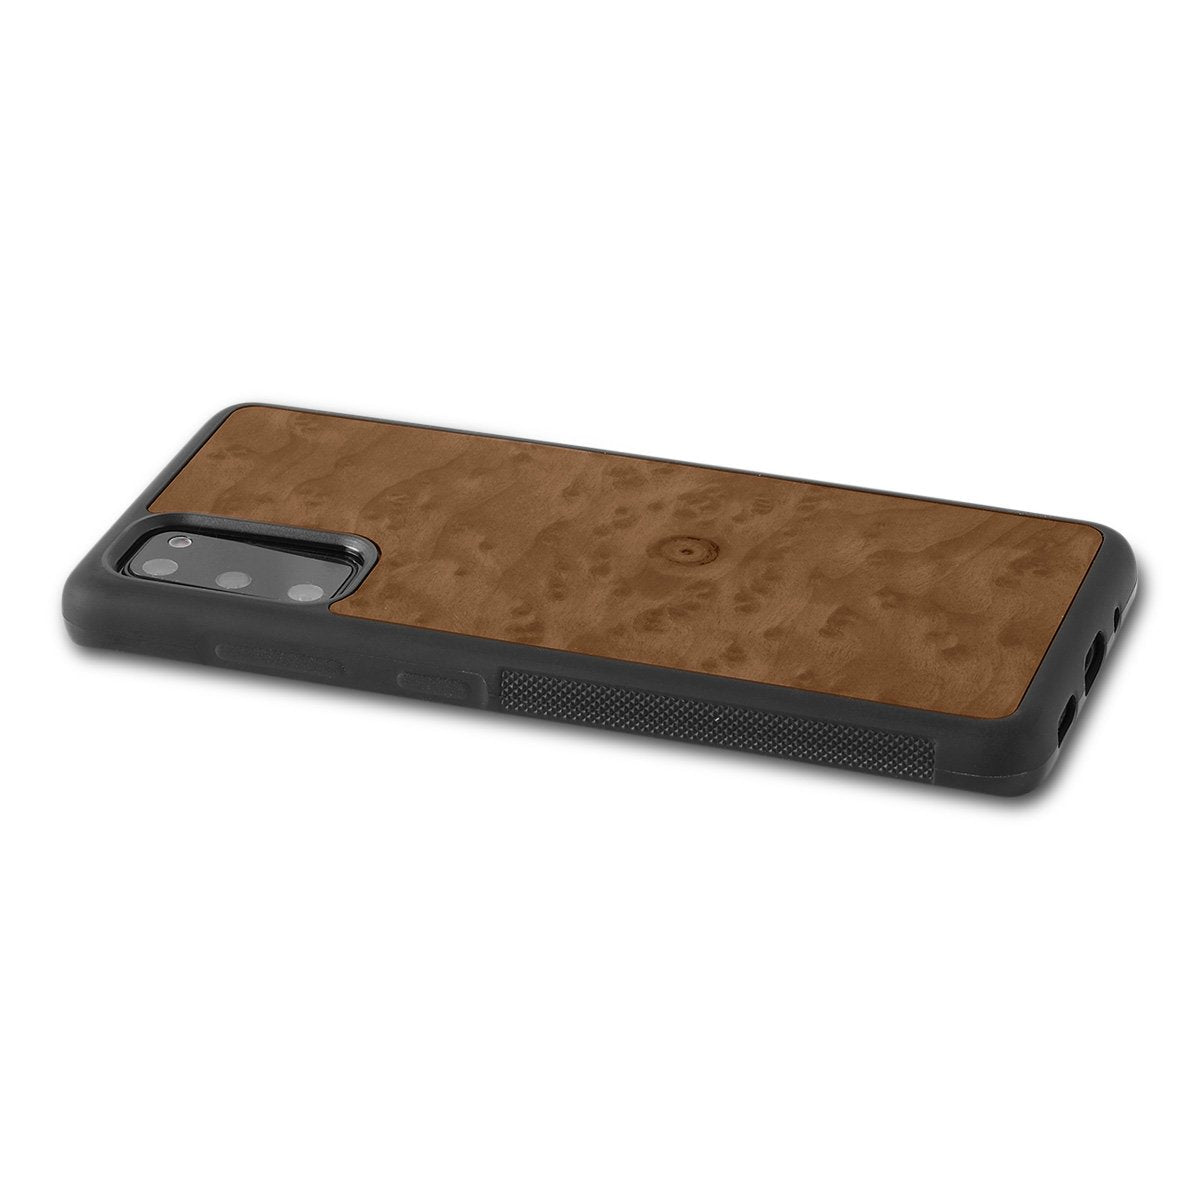 Samsung Galaxy S20+ — #WoodBack Explorer Case